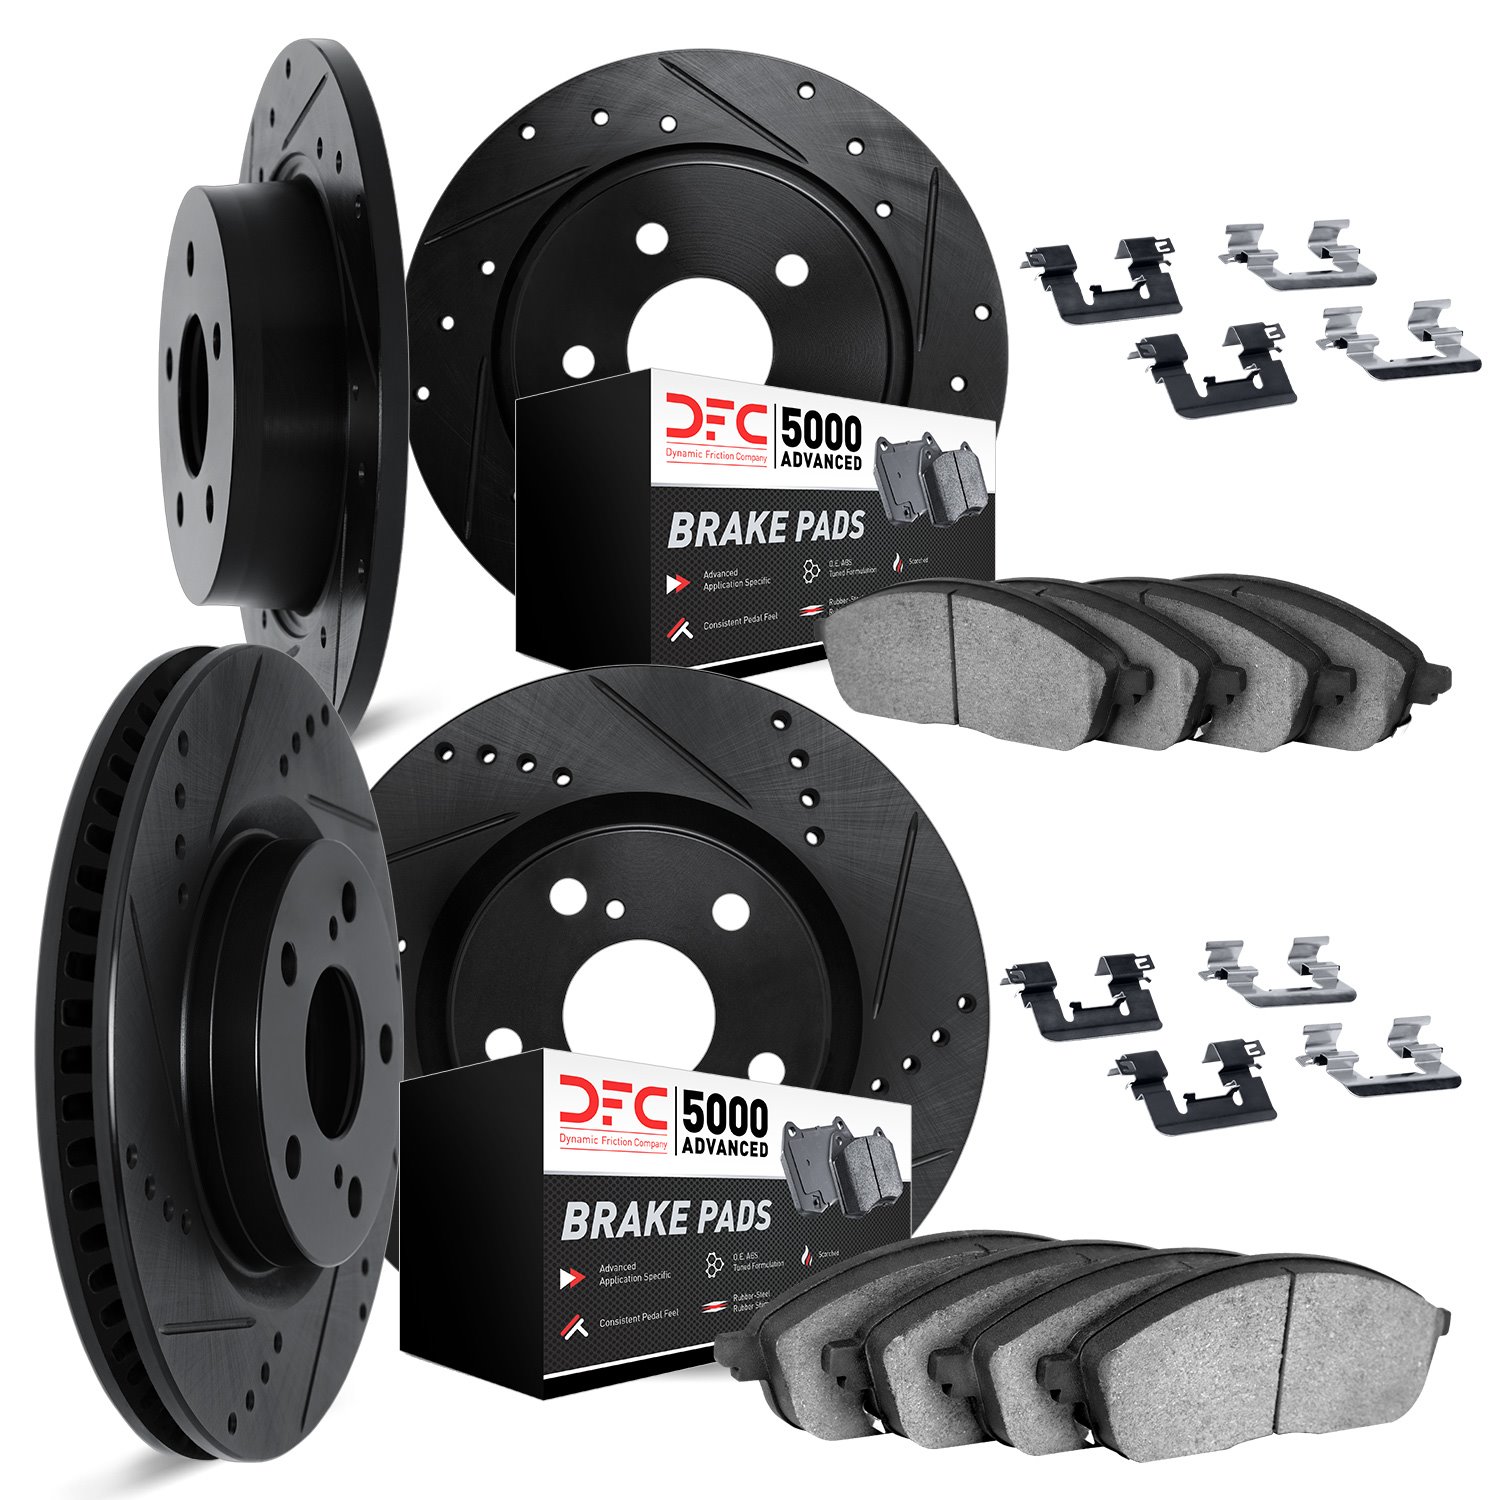 8514-03077 Drilled/Slotted Brake Rotors w/5000 Advanced Brake Pads Kit & Hardware [Black], Fits Select Kia/Hyundai/Genesis, Posi